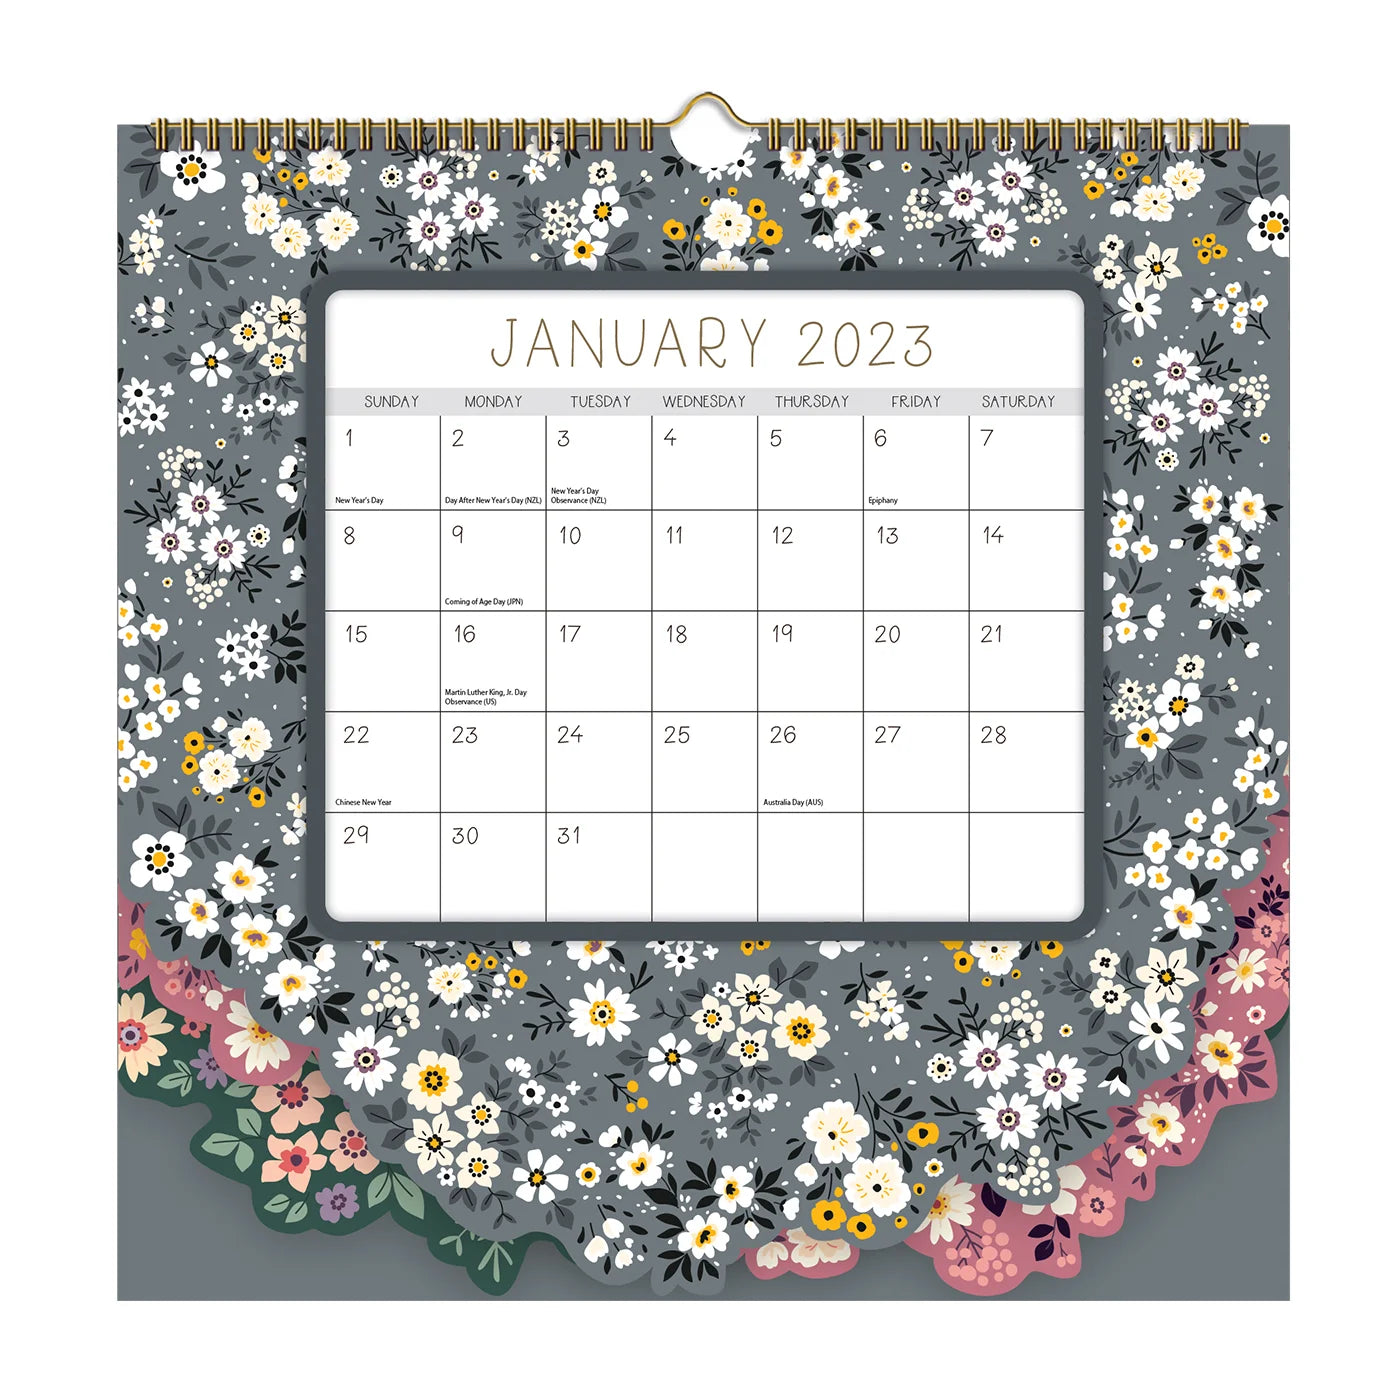 2023 LANG Whimsy Garden - Die Cut Square Wall Calendar